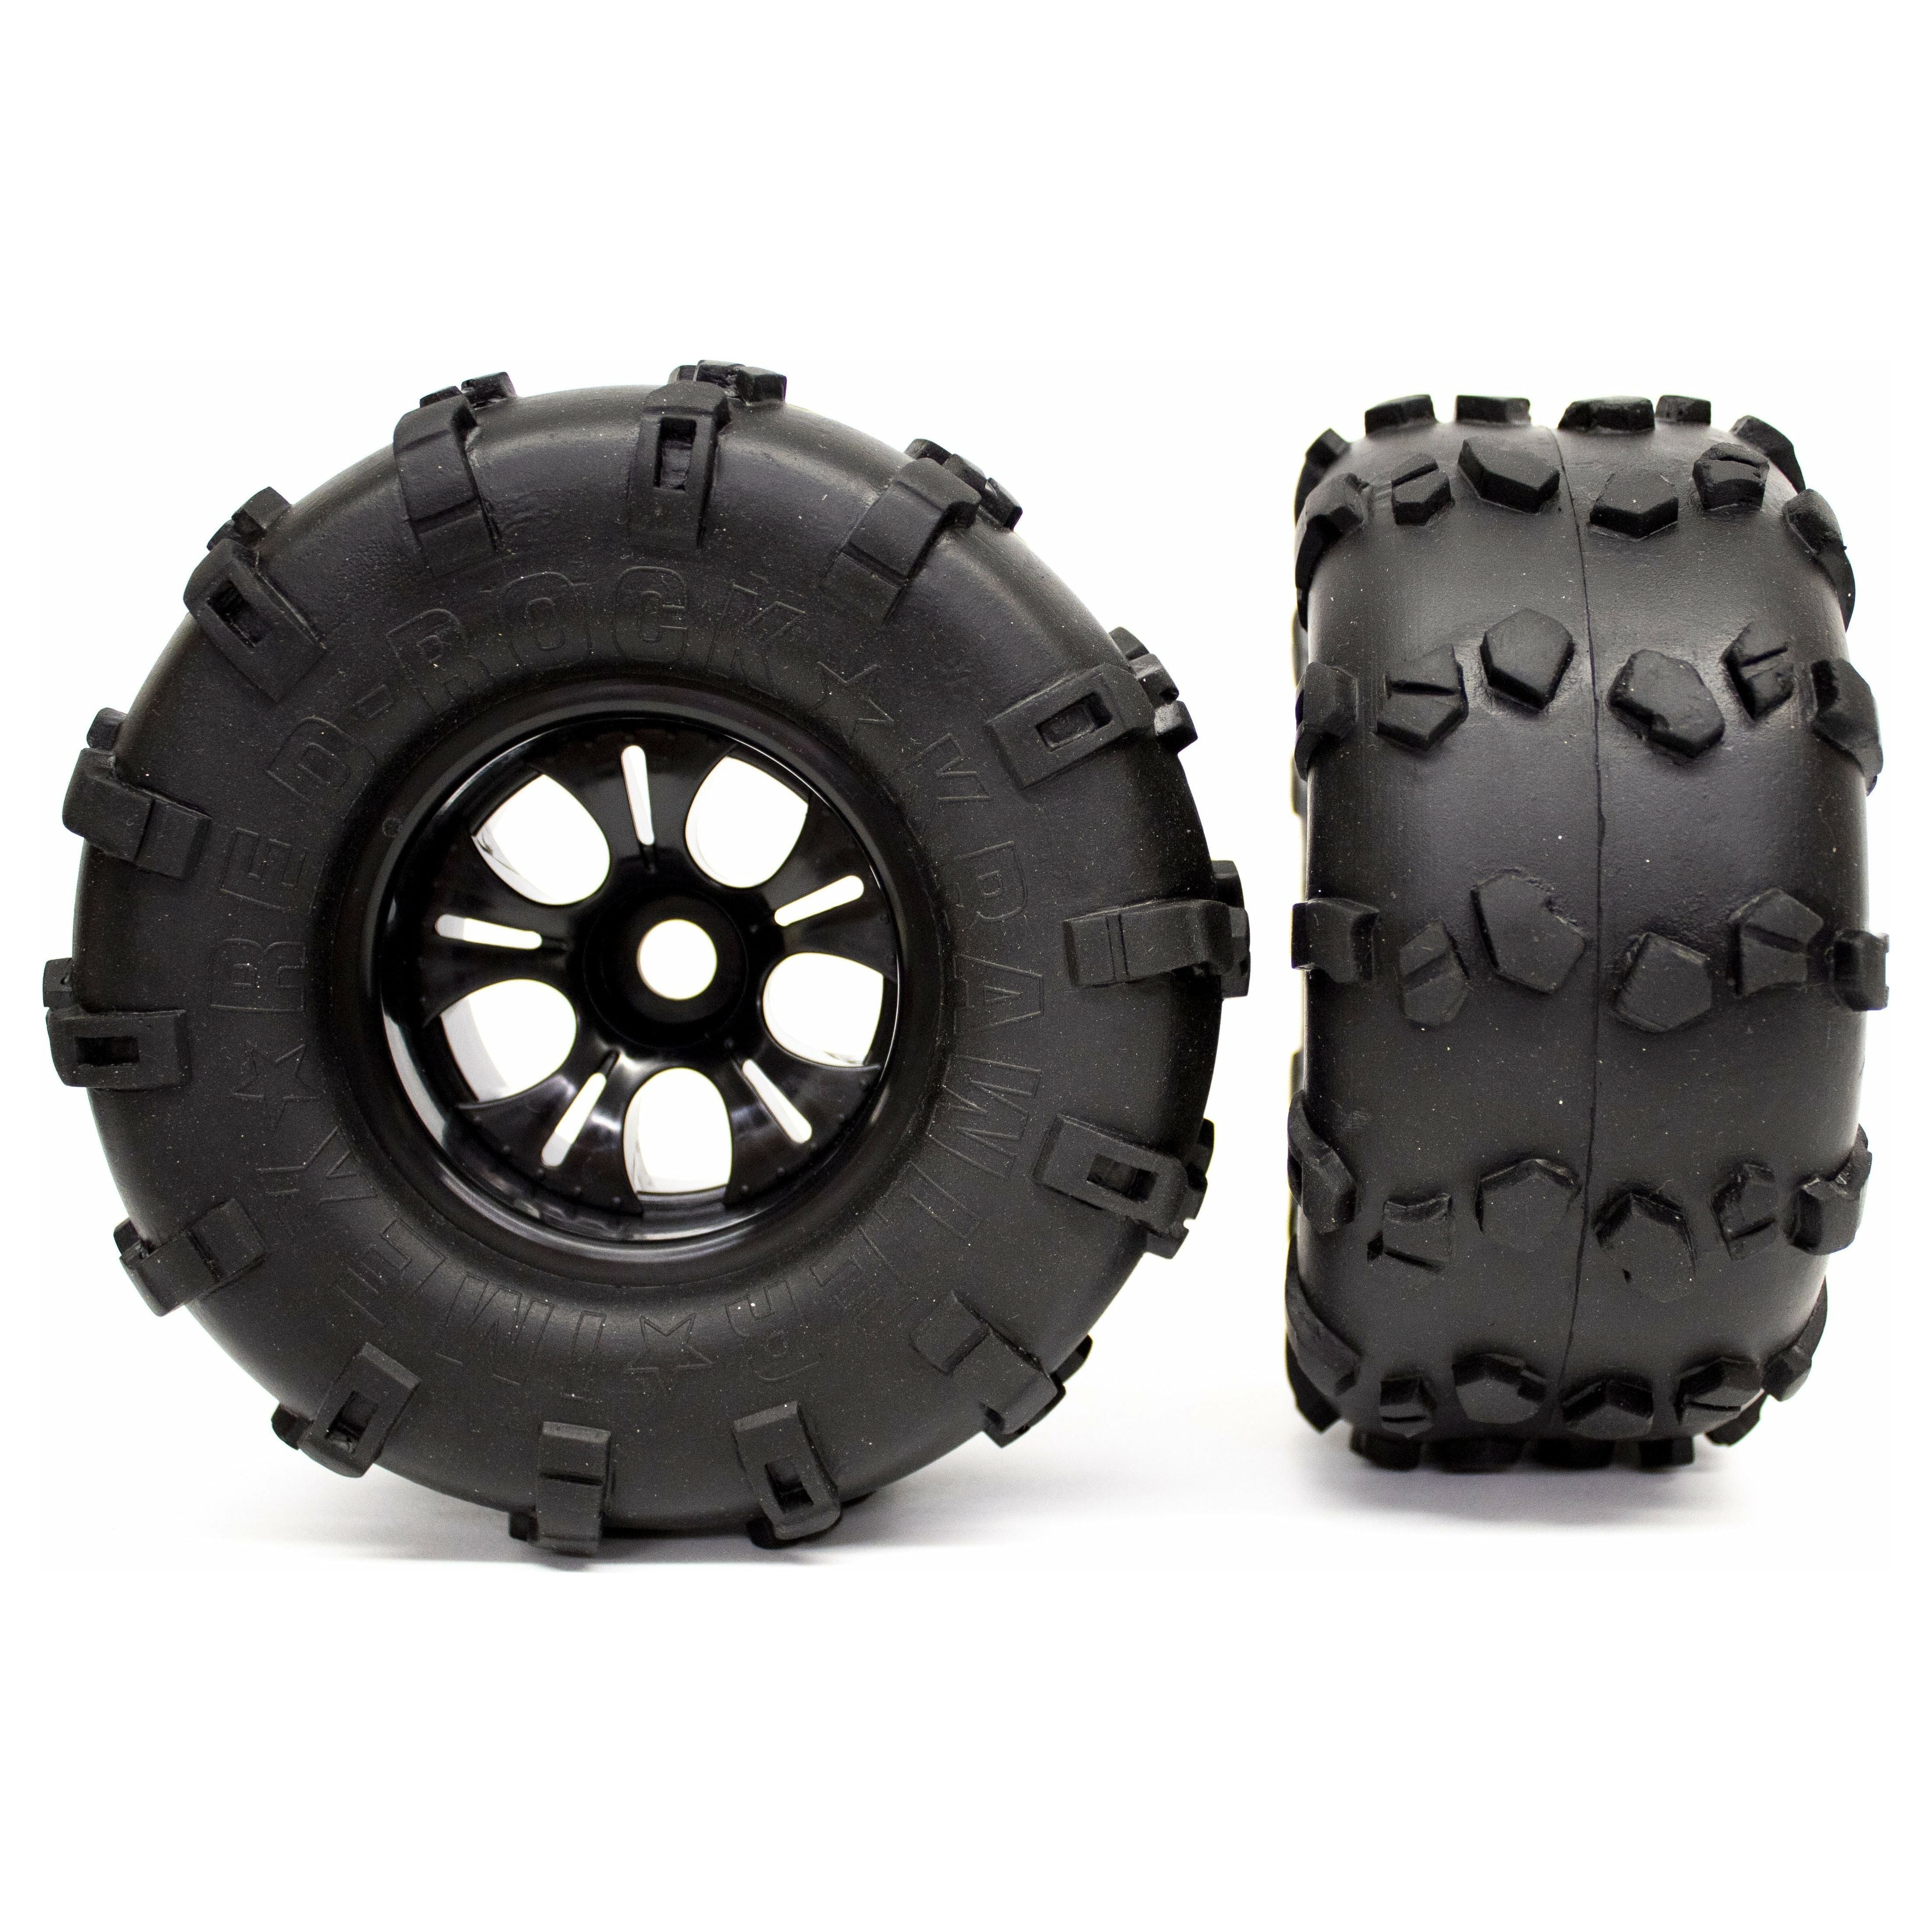 Red Rock Tires & Falcon Rims (1 Pair) (Choose Color)